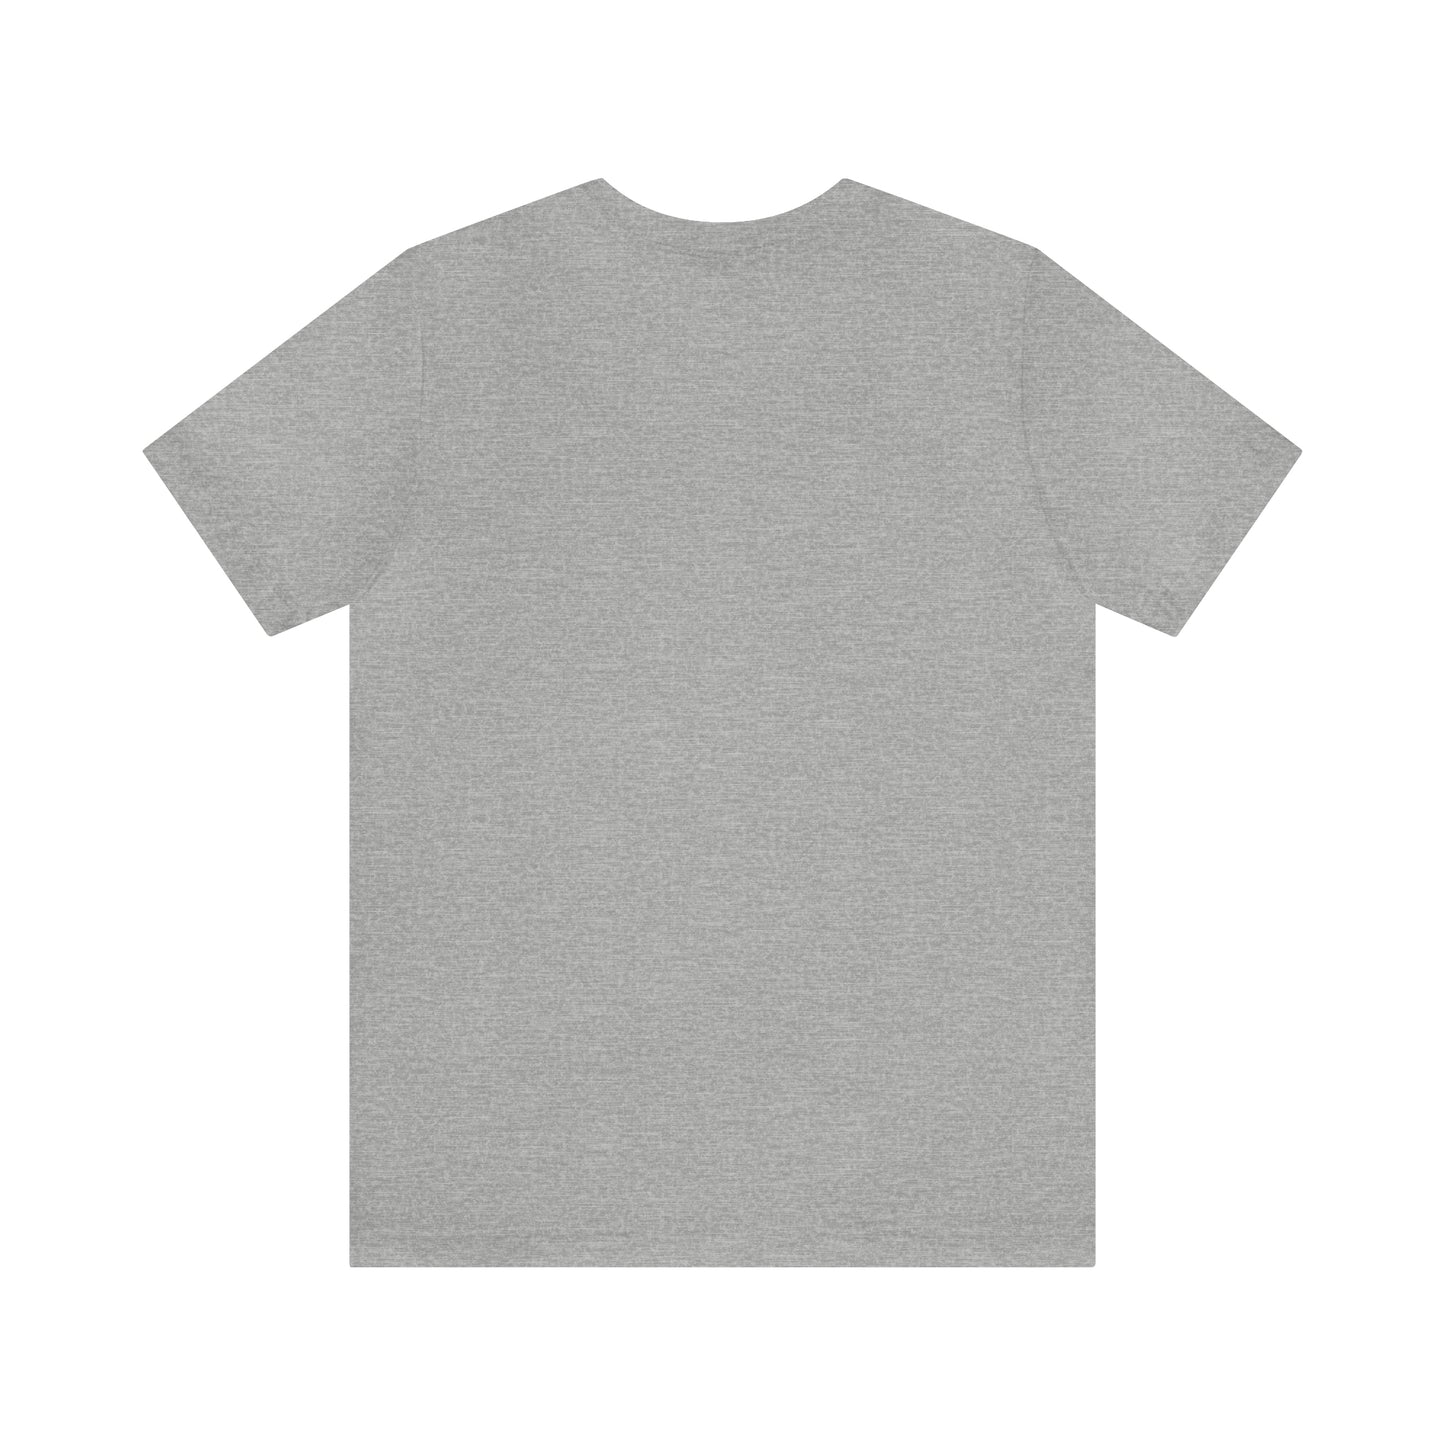 T-Shirt for Adventurers | Adventure Lover Gift Idea T-Shirt Petrova Designs